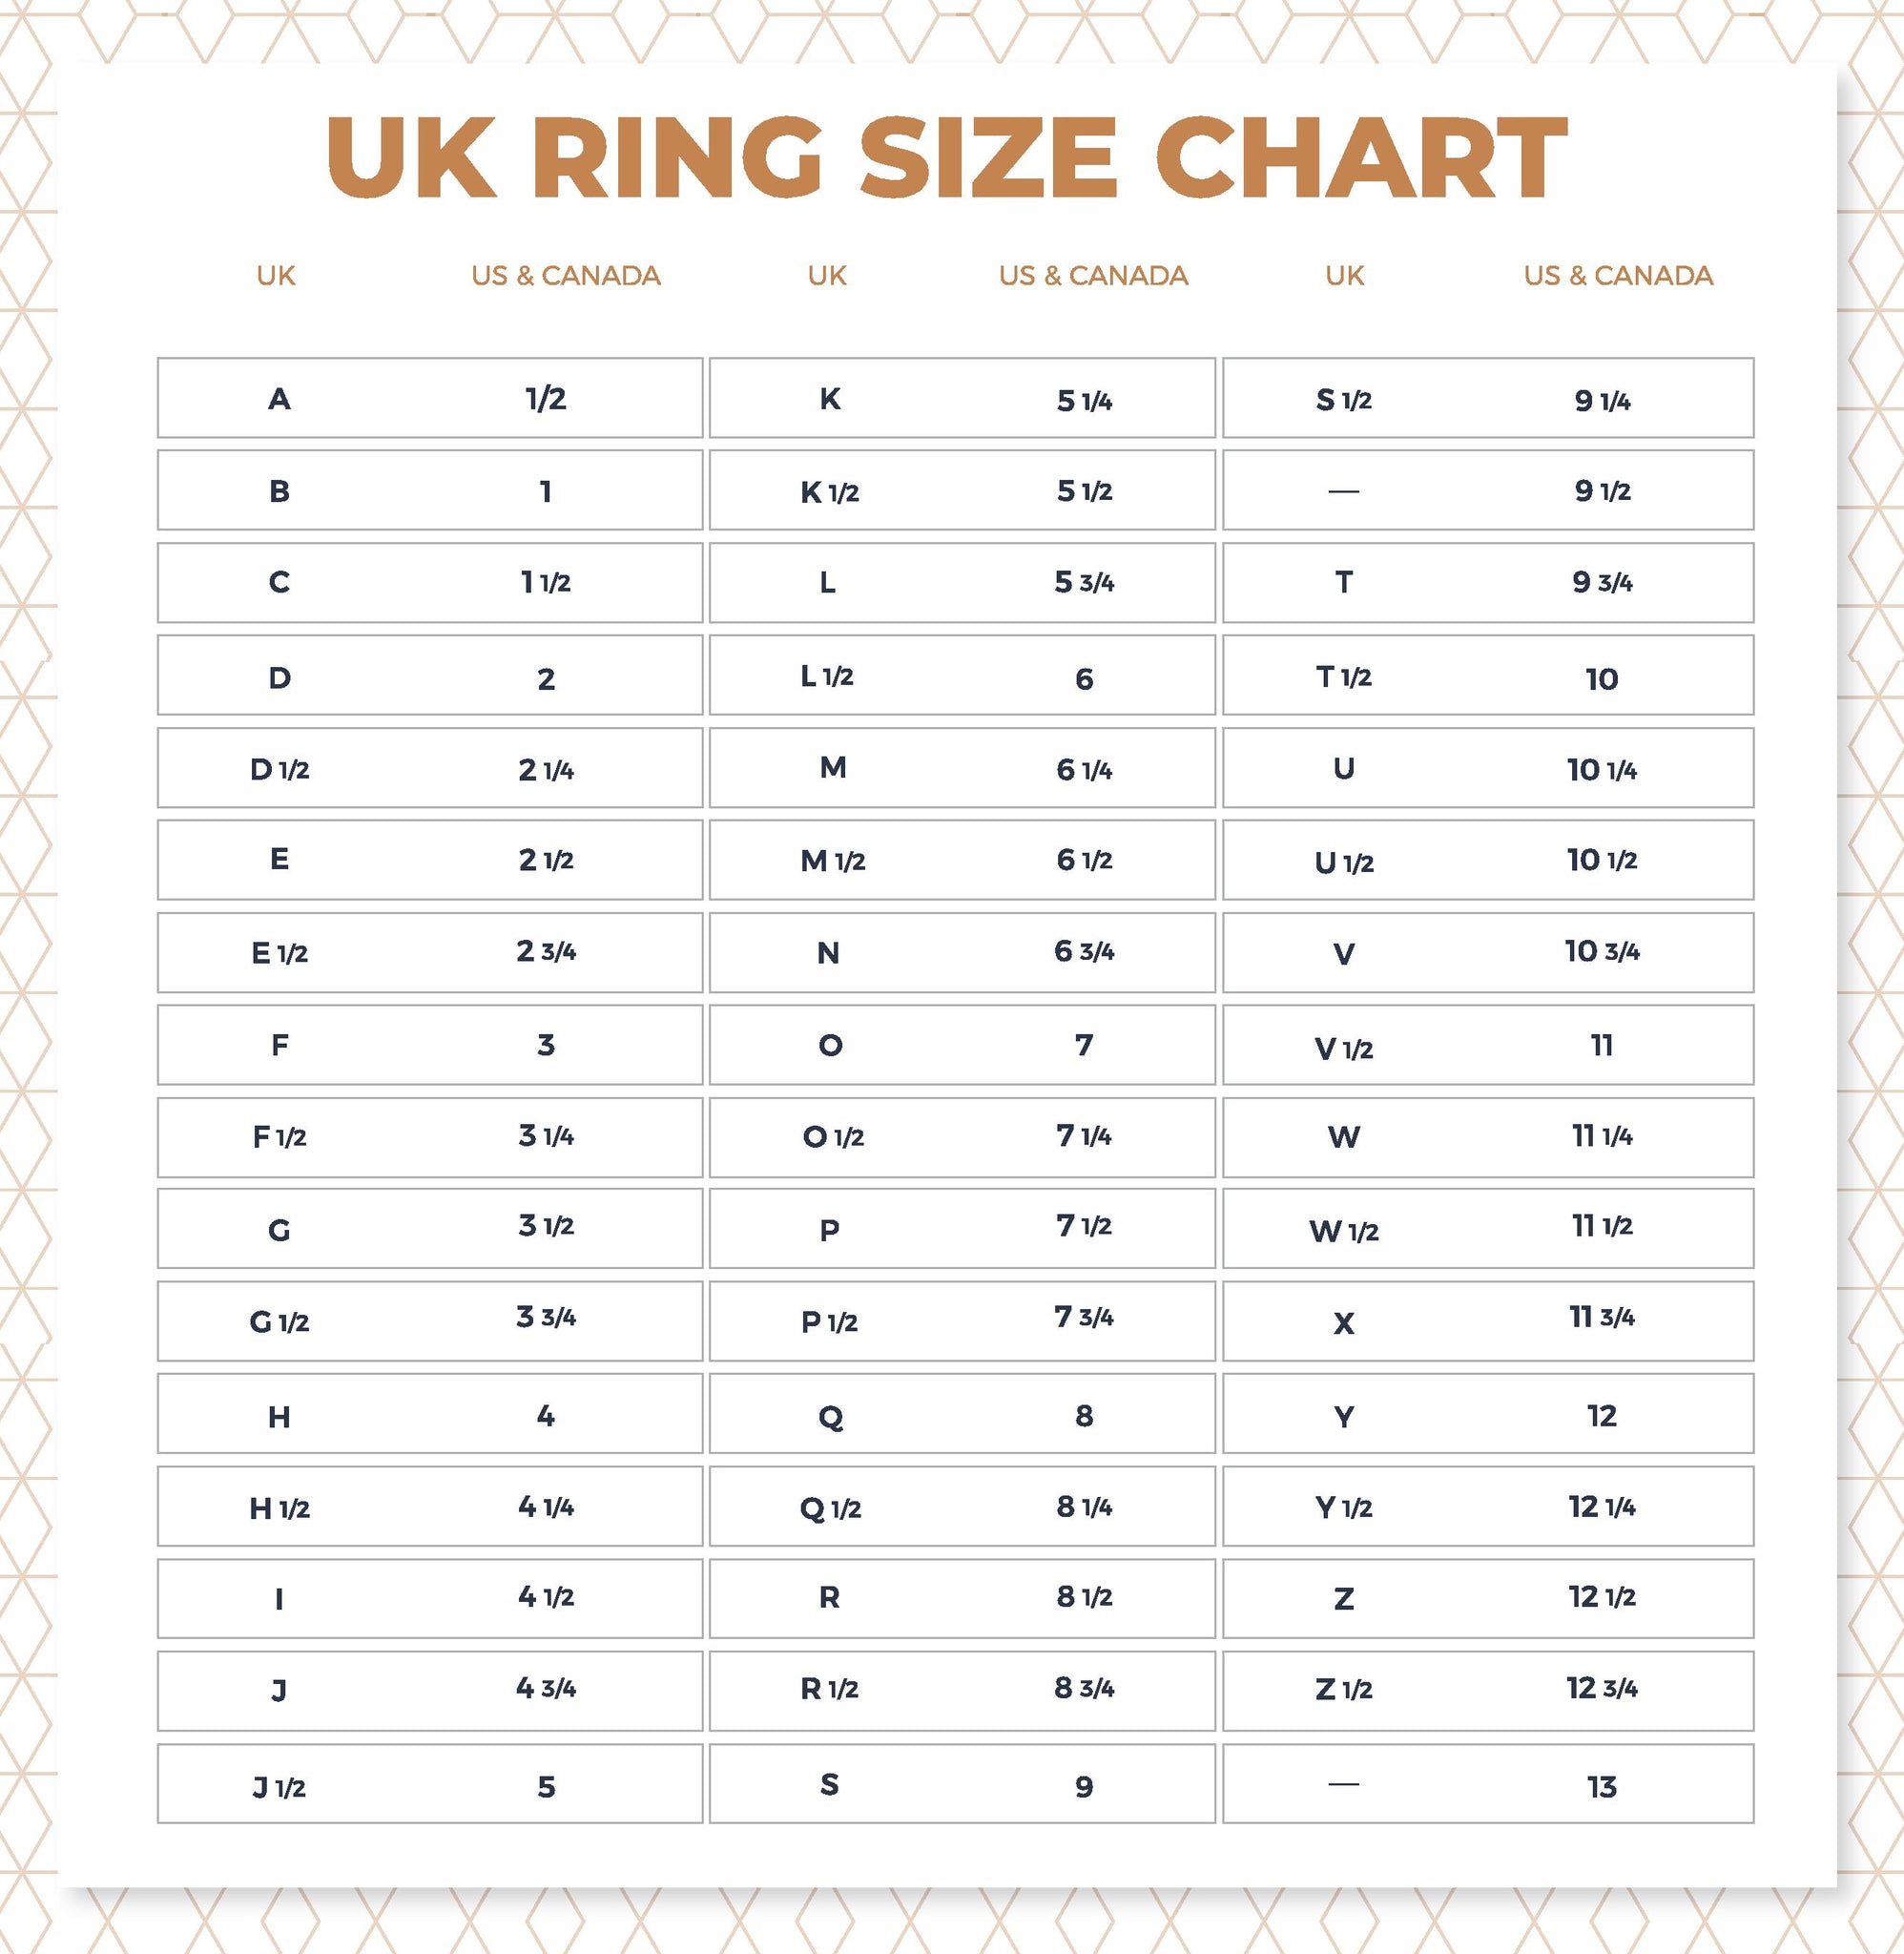 Ring Size Calculator